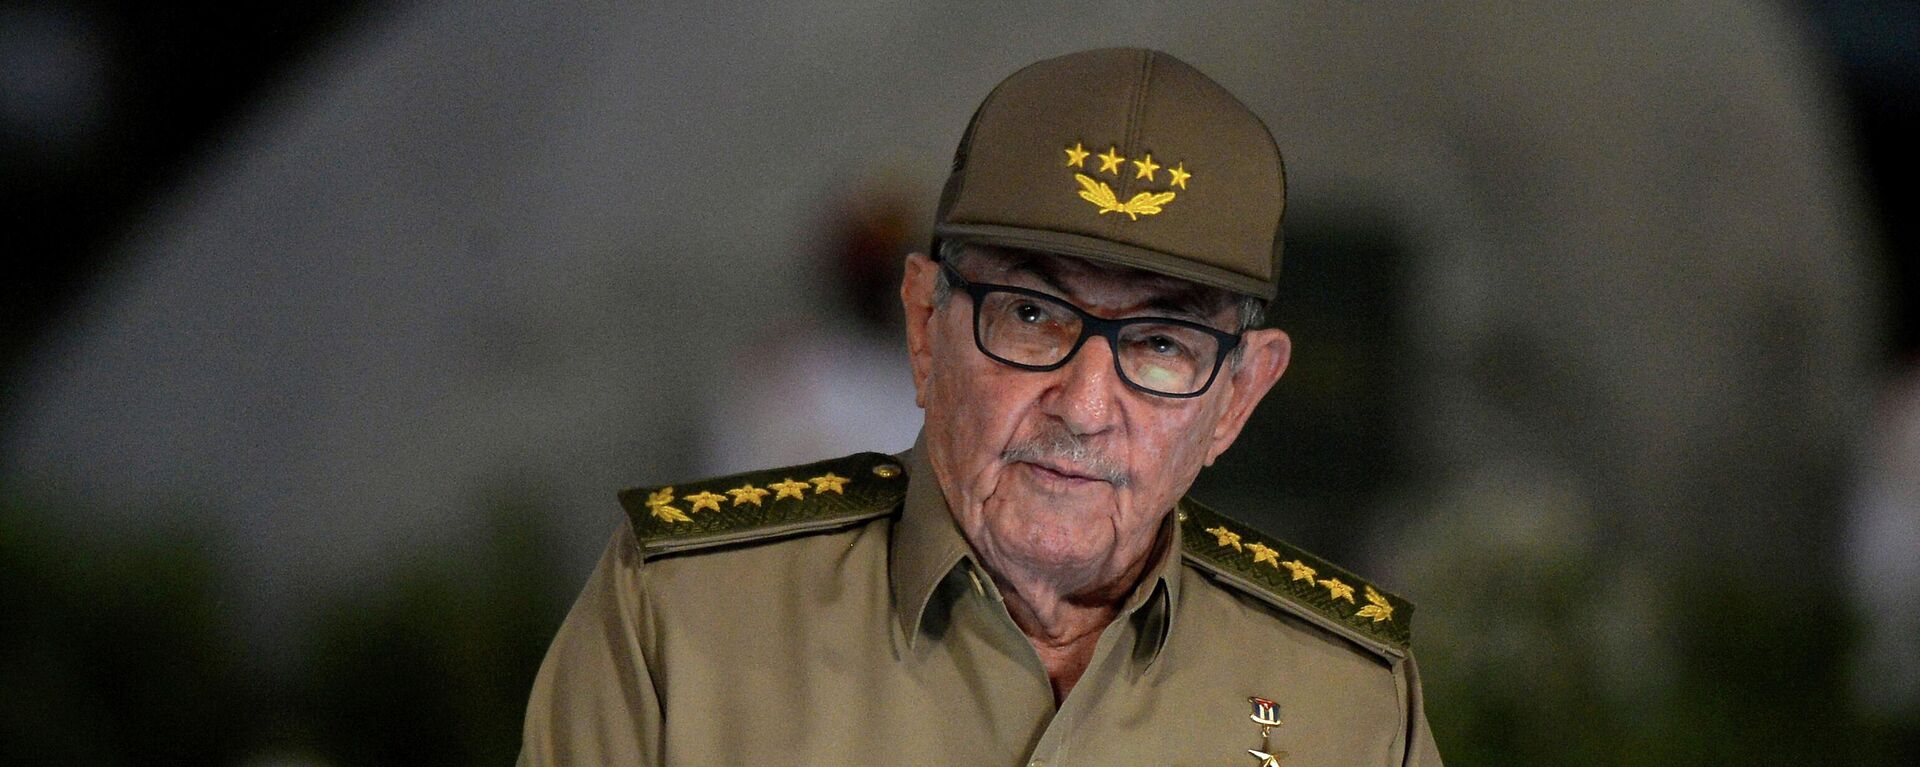 El general Raúl Castro - Sputnik Mundo, 1920, 17.04.2021